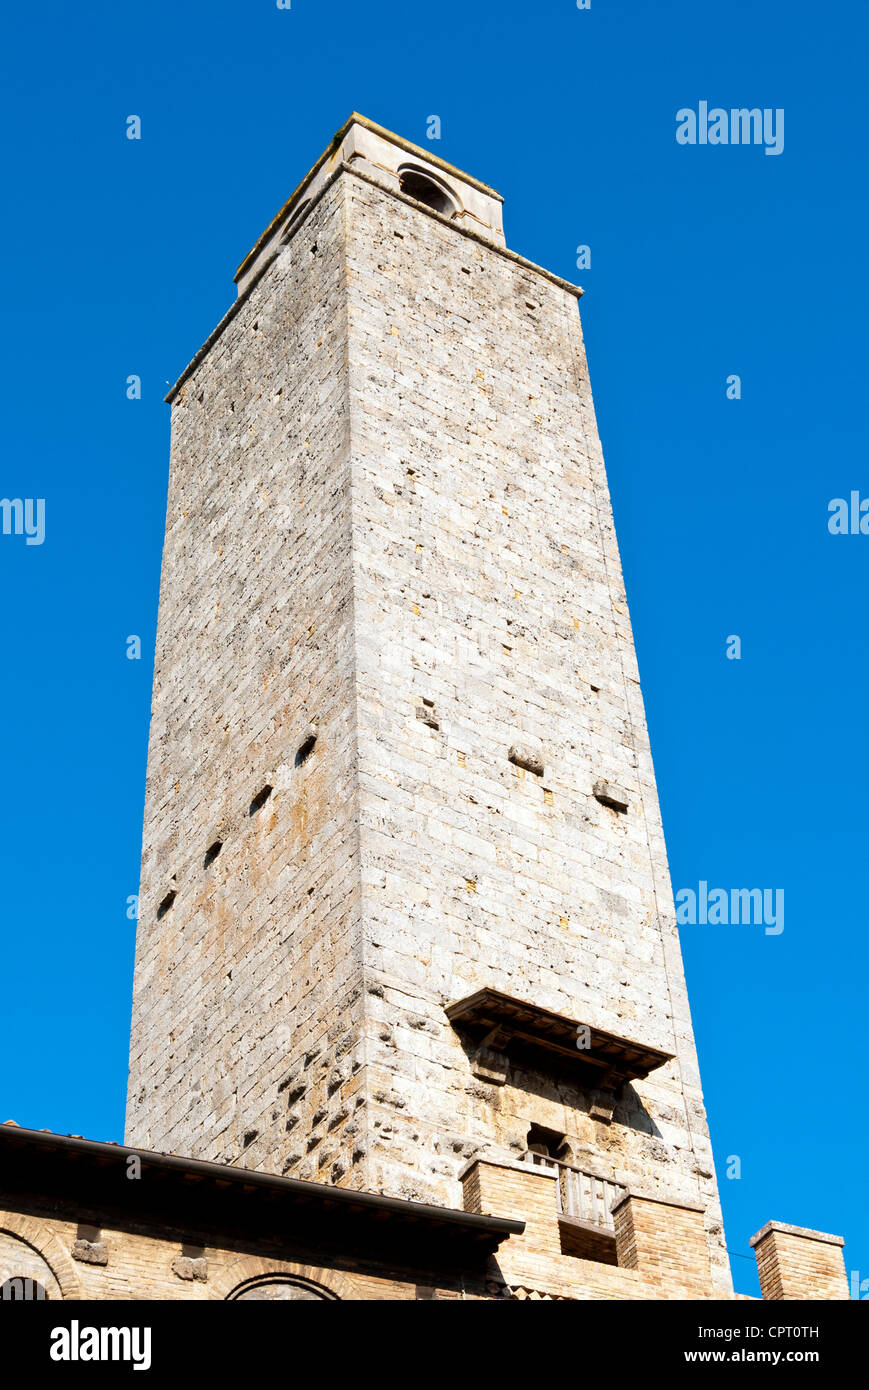 San Gimignano, UNESCO World Heritage Site, Siena province,Tuscany, Italy, Europe Stock Photo